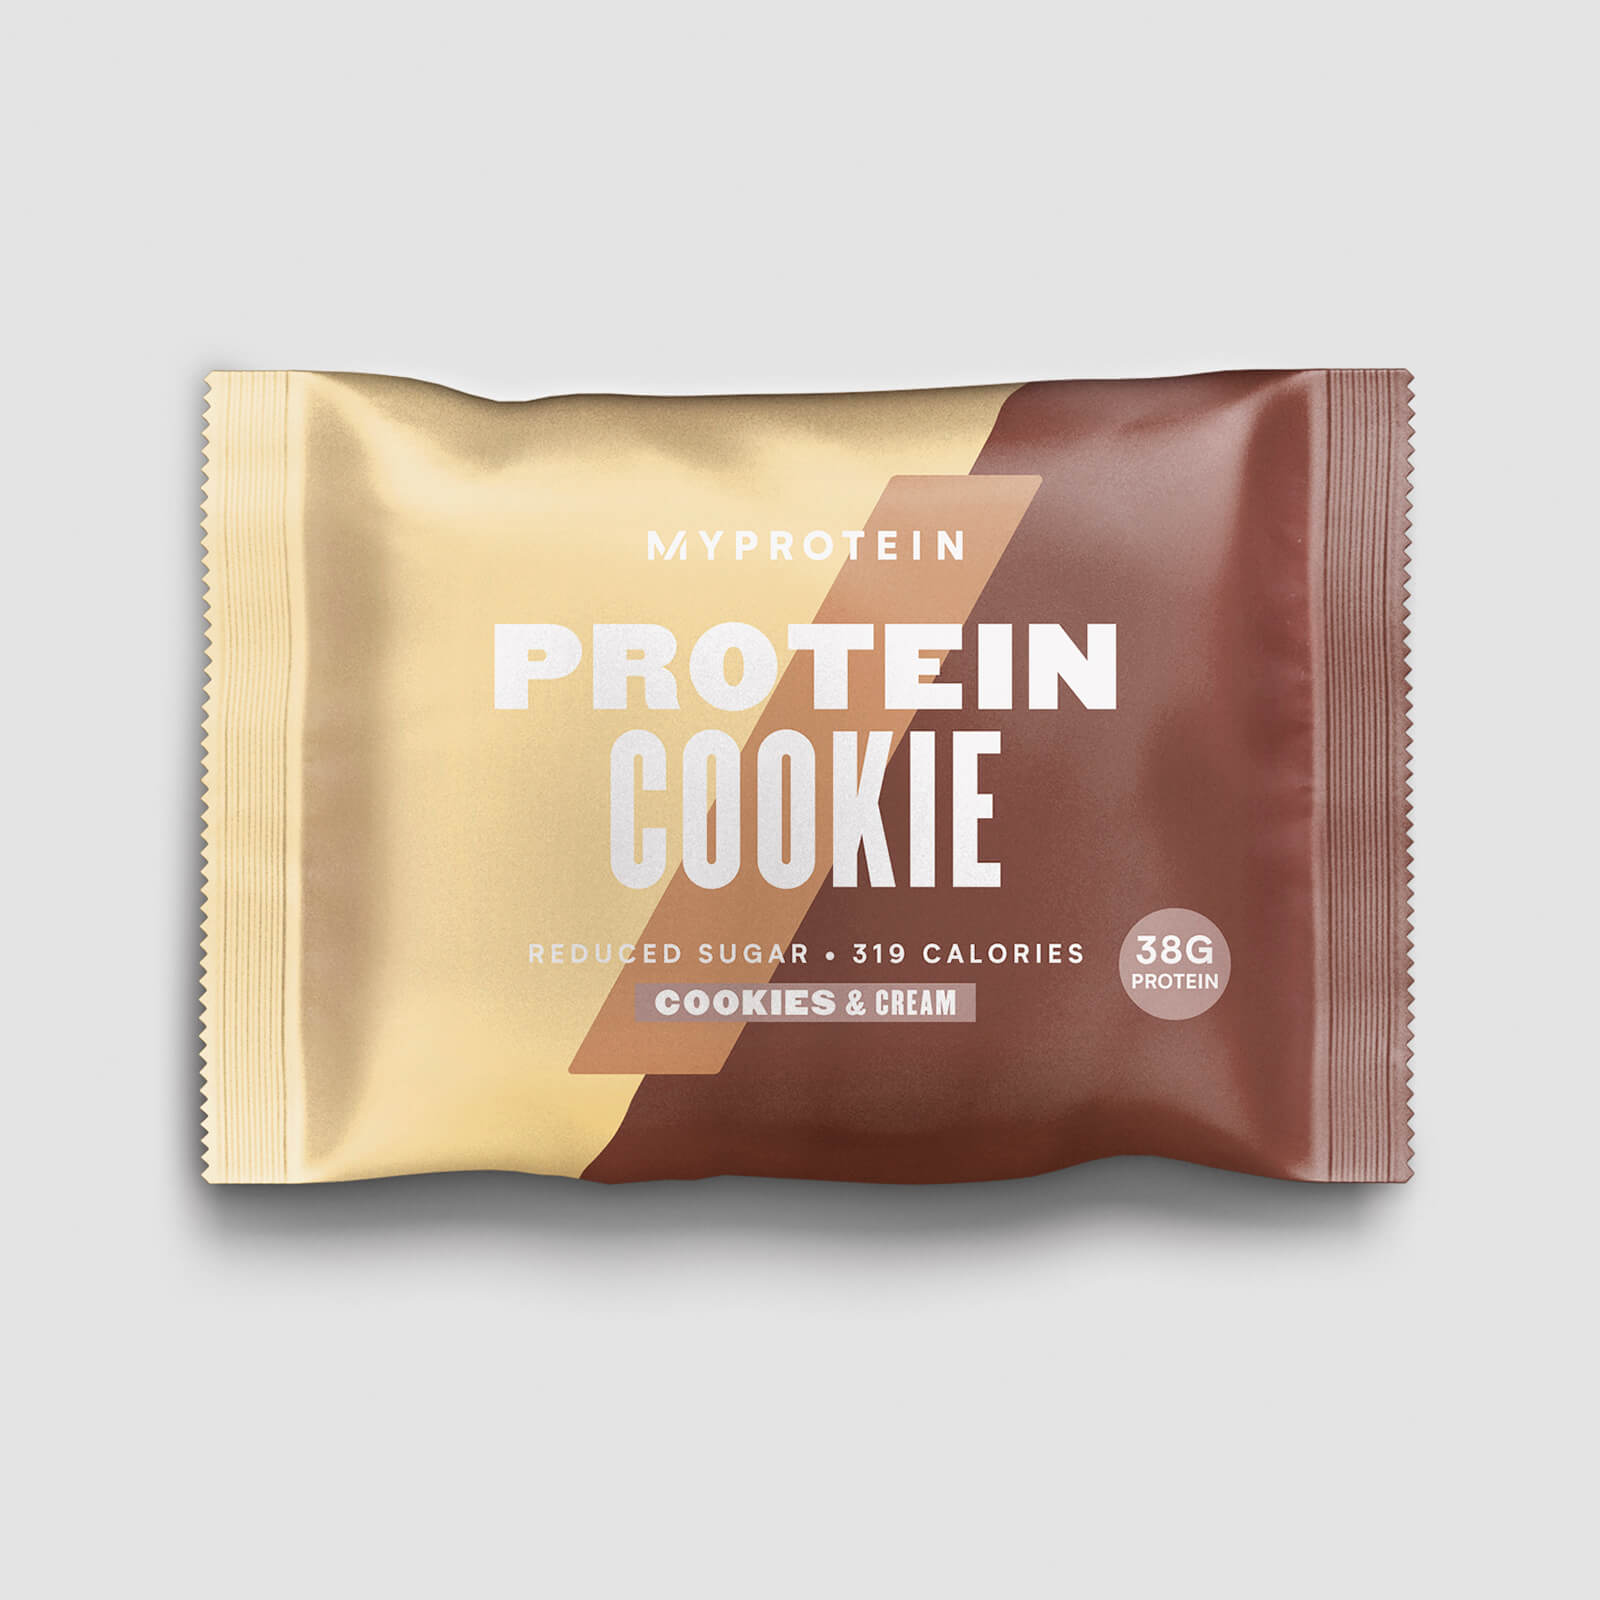 Myprotein Protein Cookie (smagsprøve) - Havre & Rosin